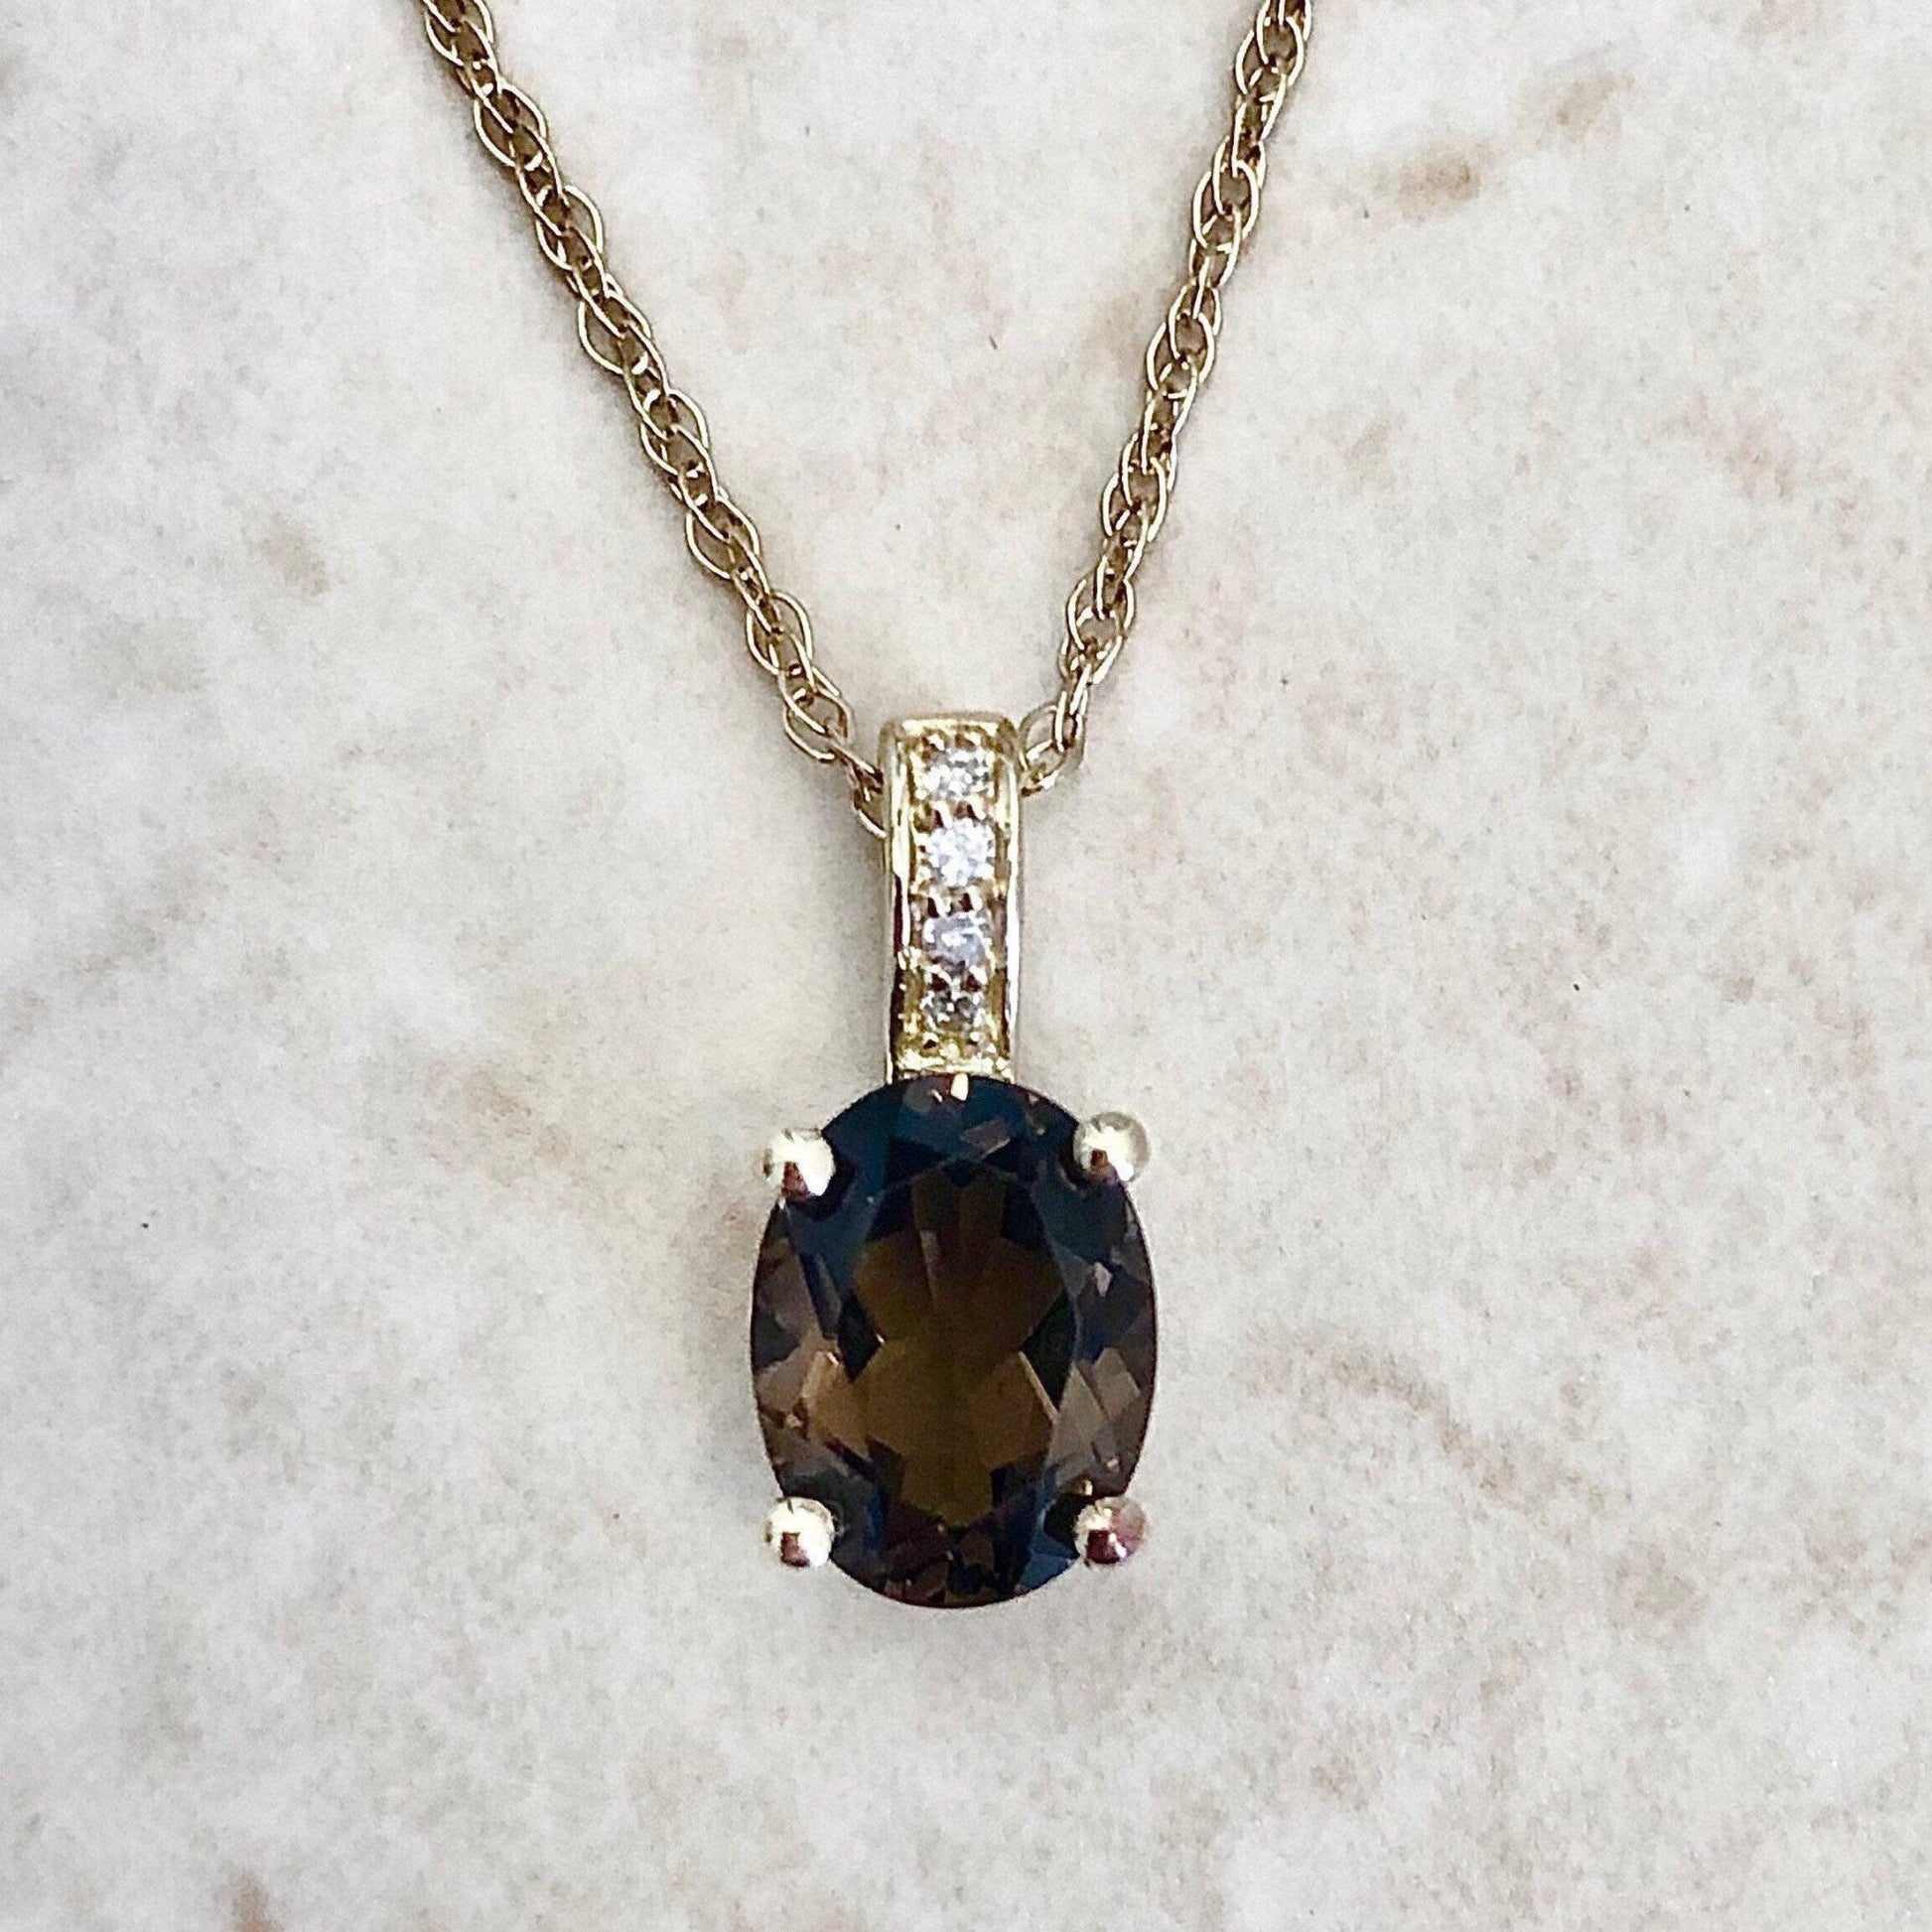 Smoky Quartz & Diamond Pendant Necklace - 14 Karat Yellow Gold Pendant Necklace - June Birthstone - Genuine Gemstone - 18” Chain